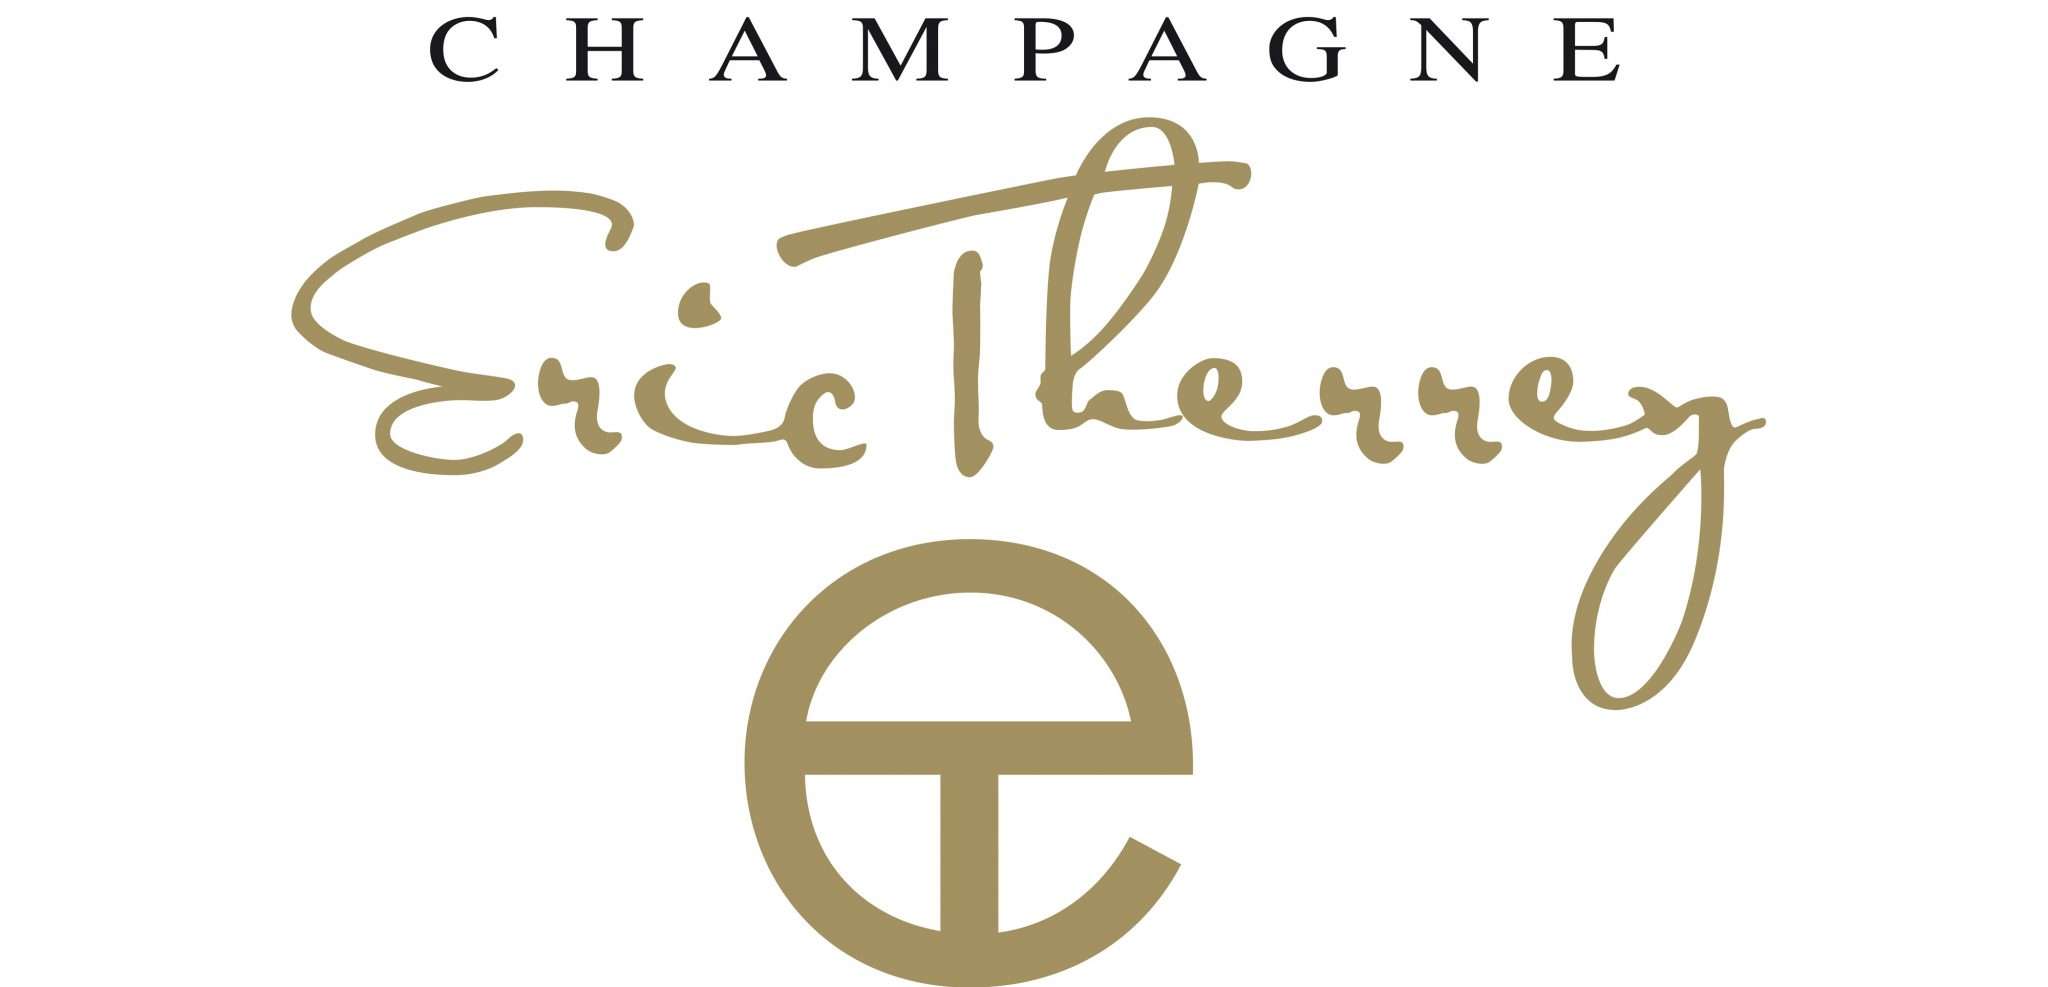 - Champagne Eric Therrey -